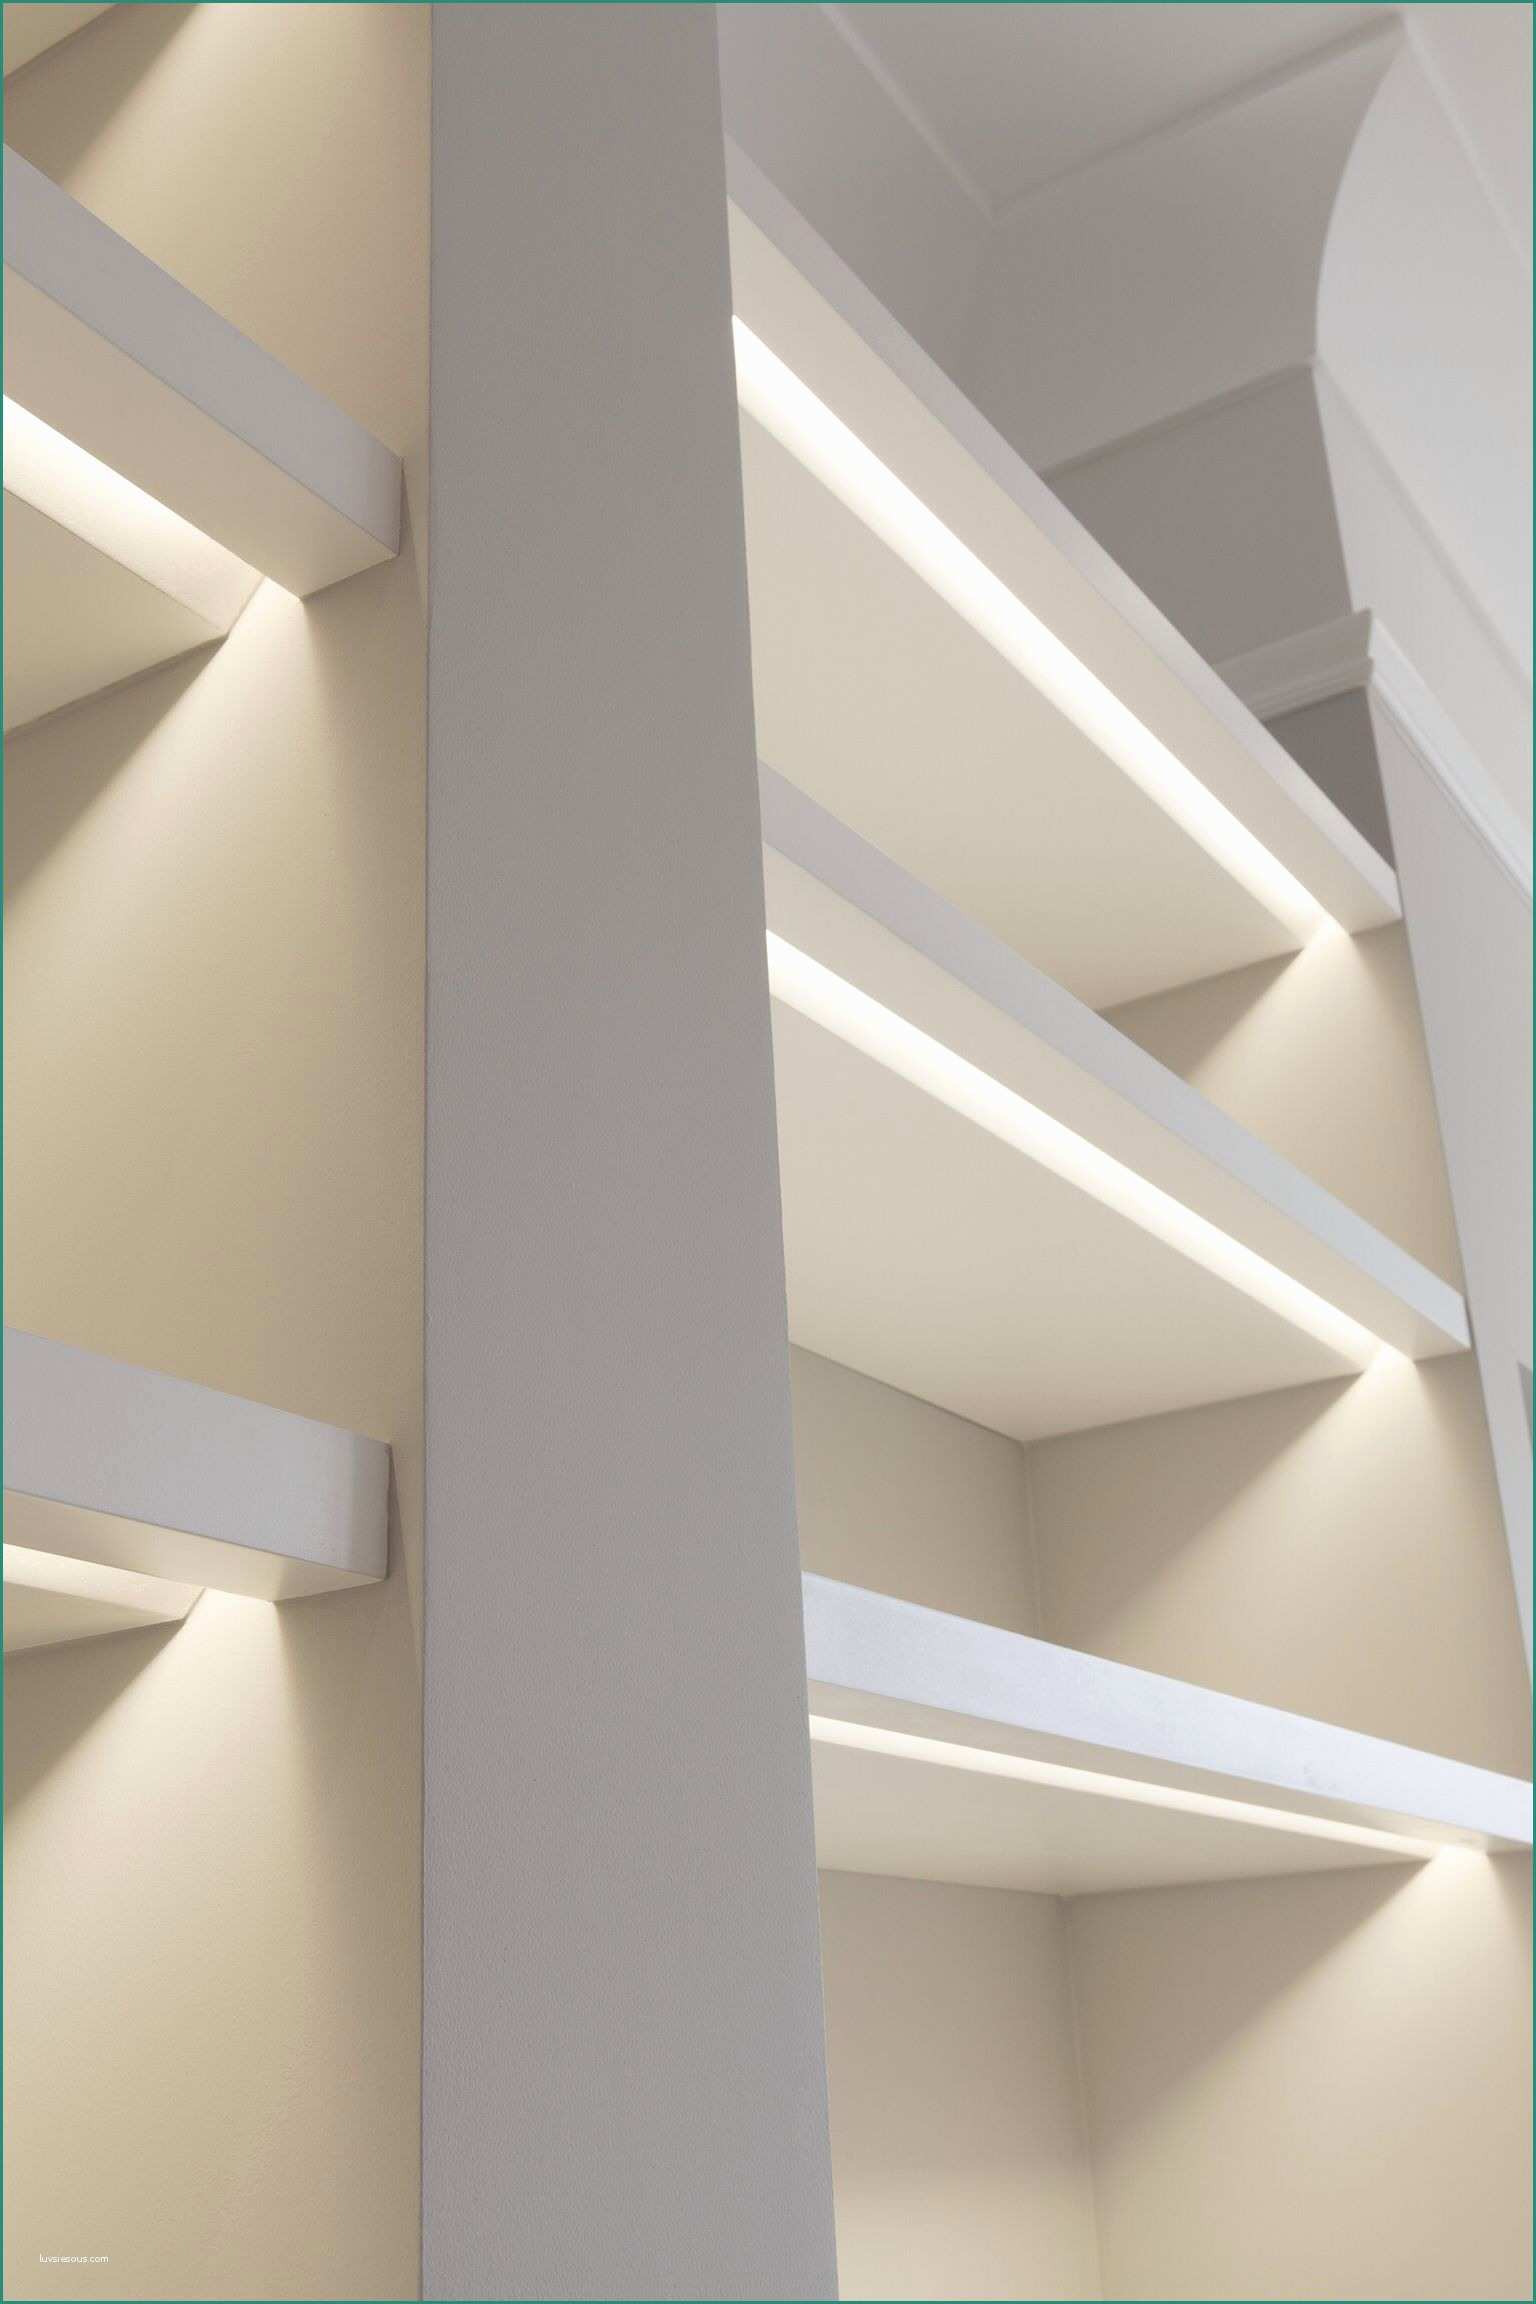 Illuminazione Scale Interne E Shelves Lit with Recessed Led Details L¢mpadas